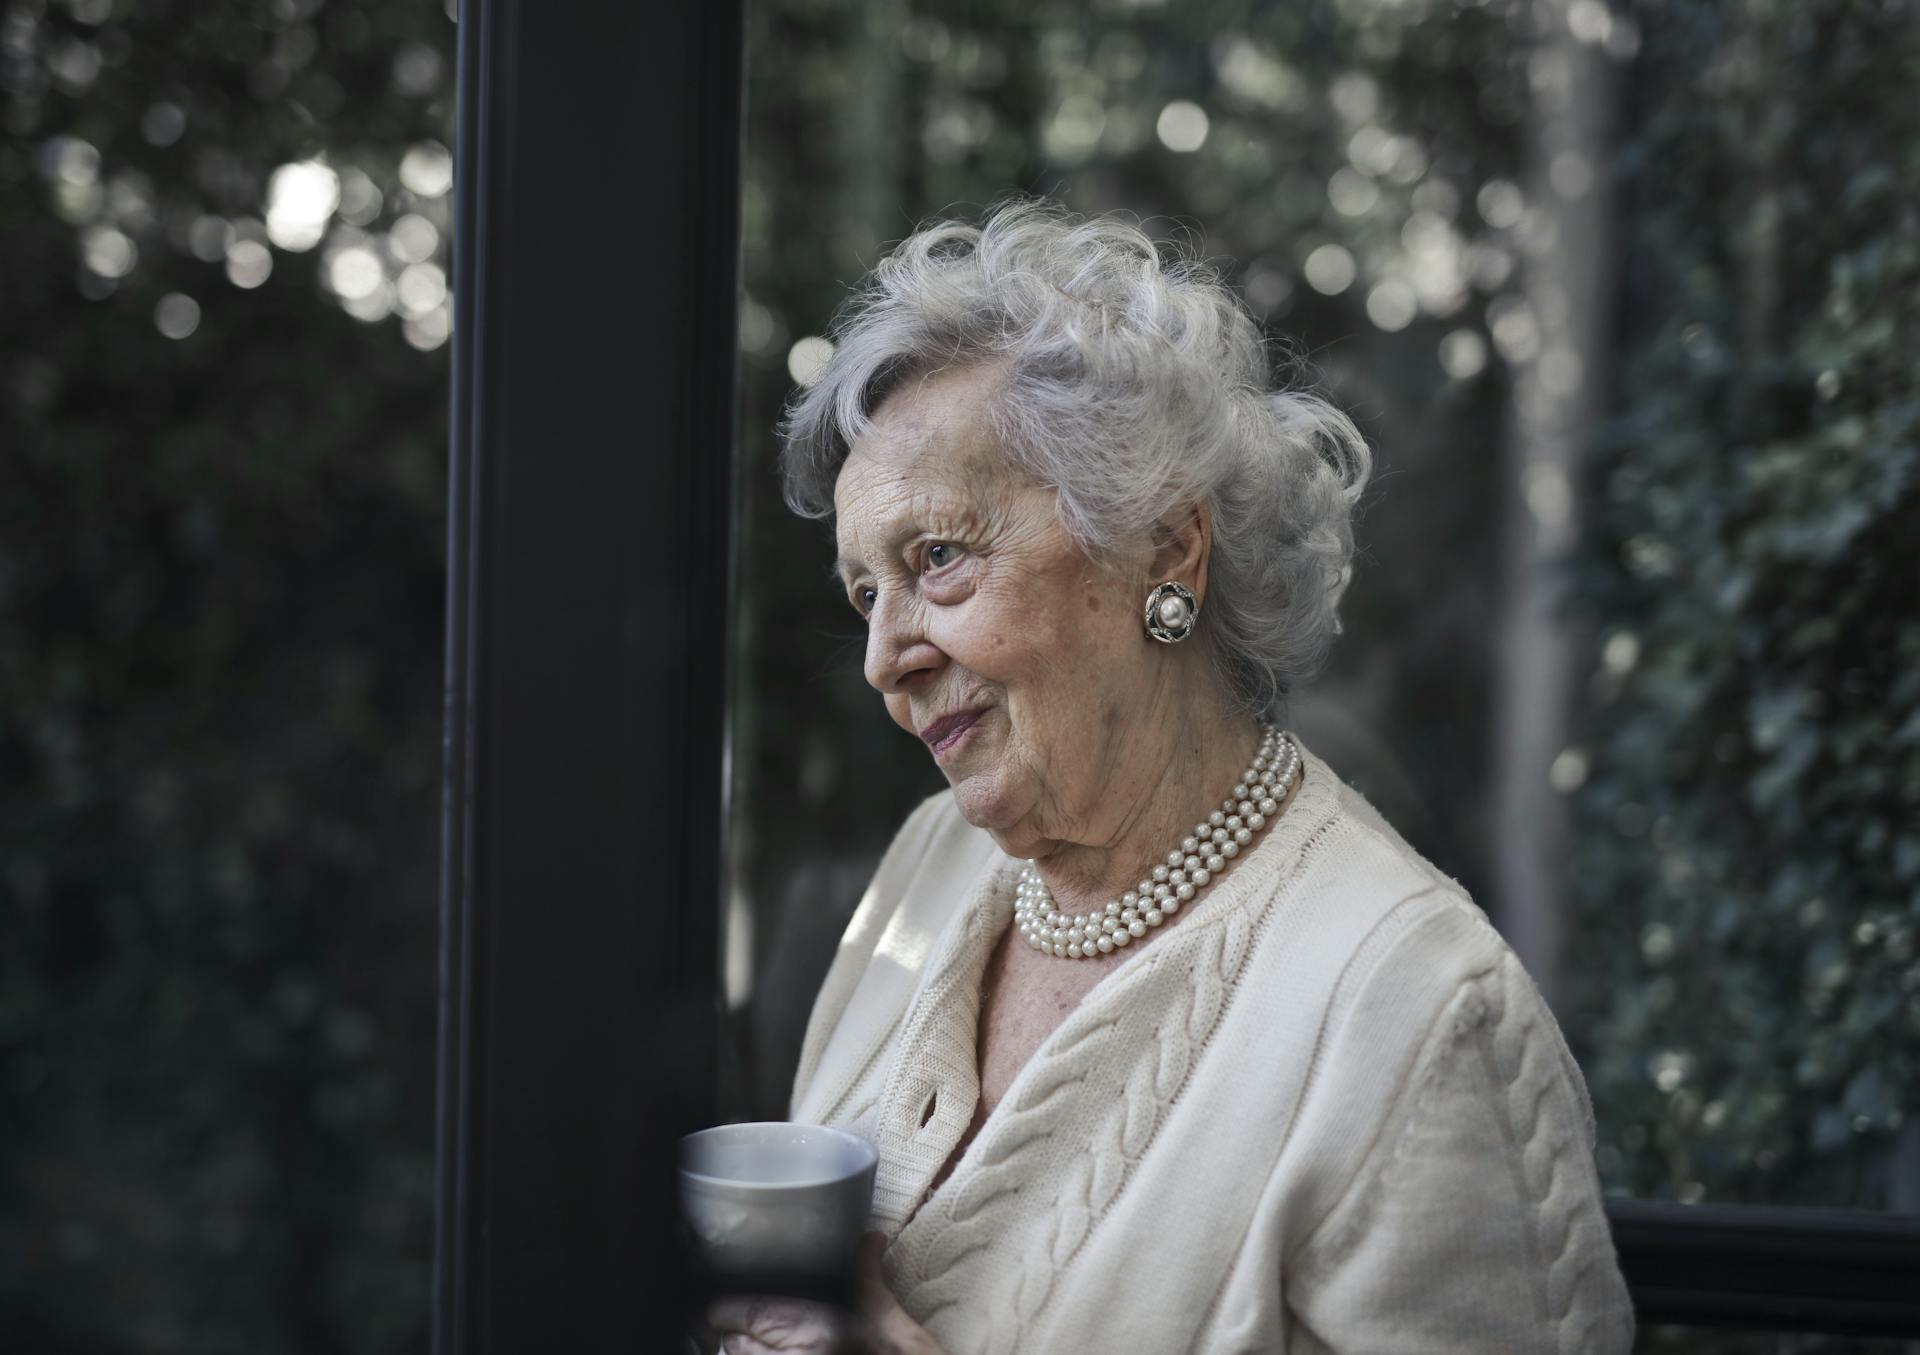 Thoughtful elderly woman | Source: Pexels